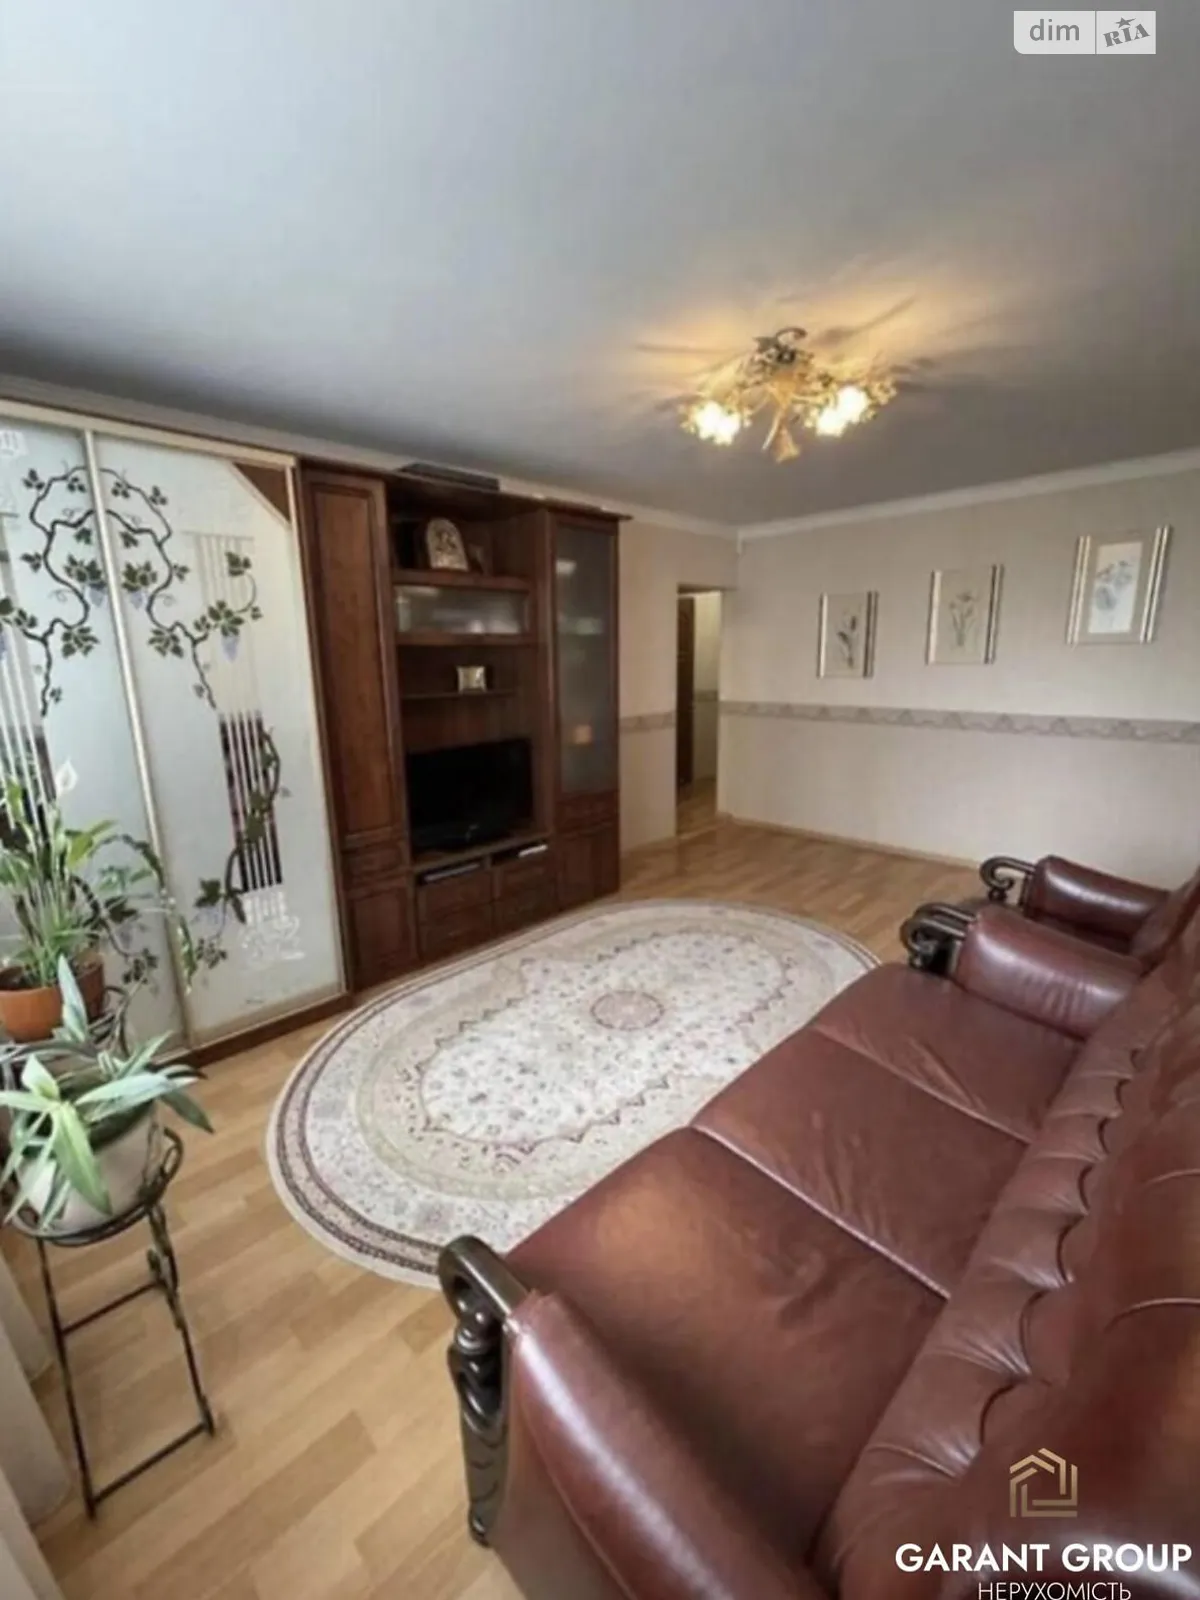 Продается комната 67 кв. м в Одессе, цена: 62000 $ - фото 1